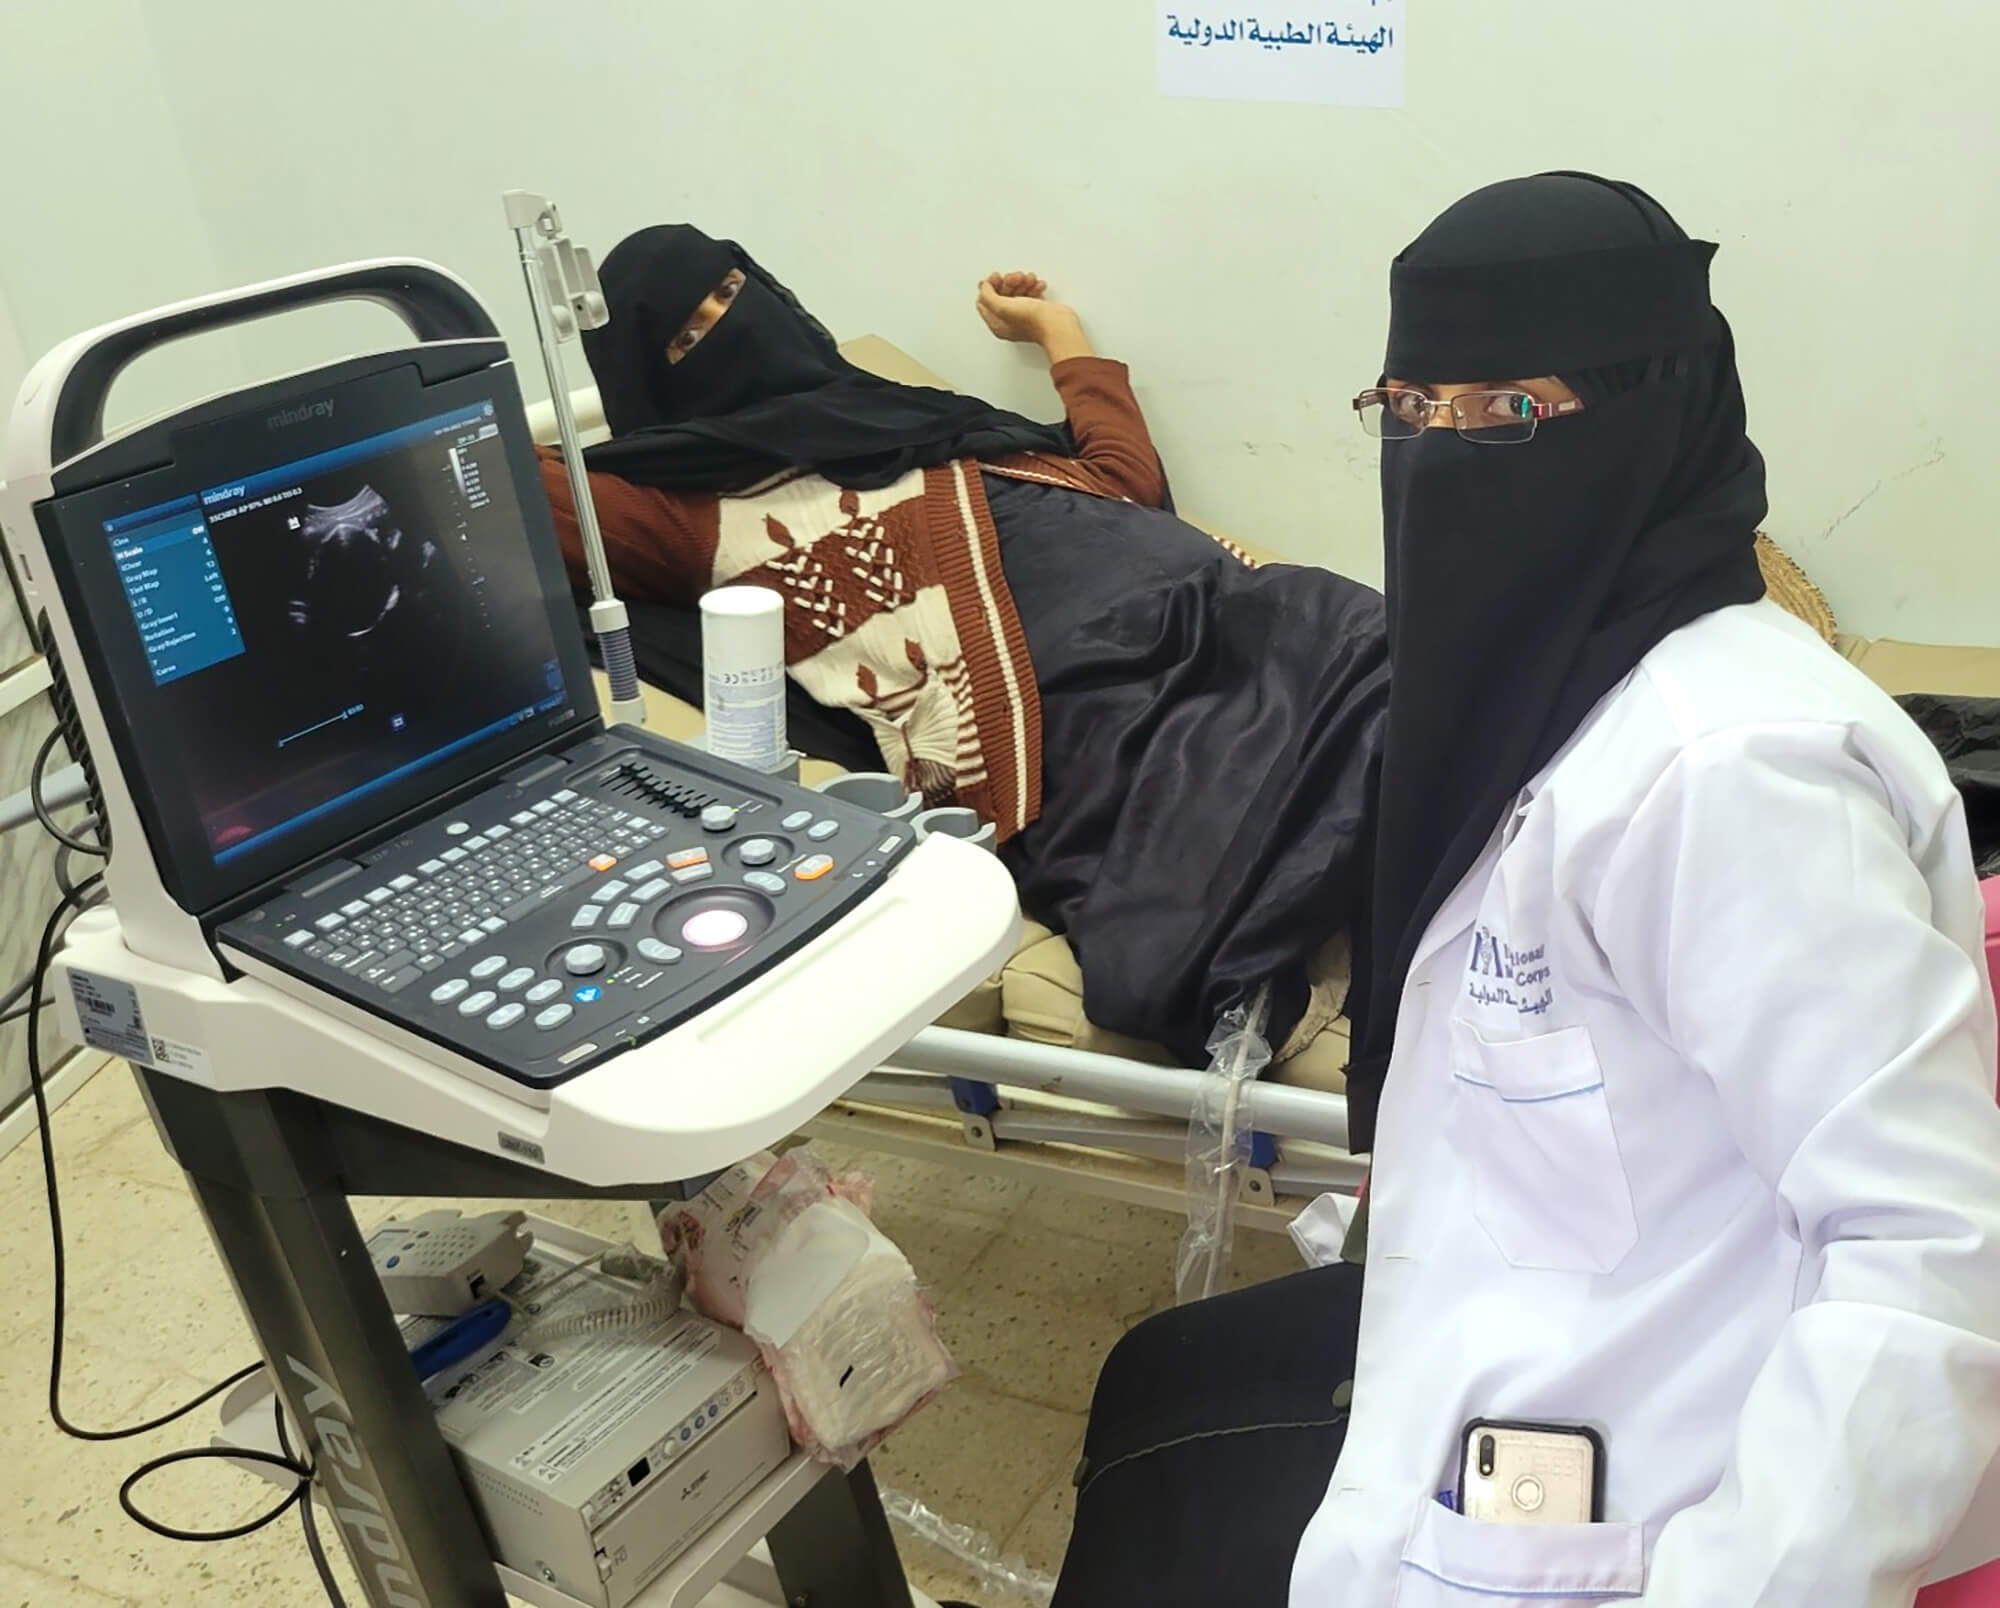 Midwife technician Ebtisam Al-Zaidi examines a pregnant woman at a health centre in Yemen.